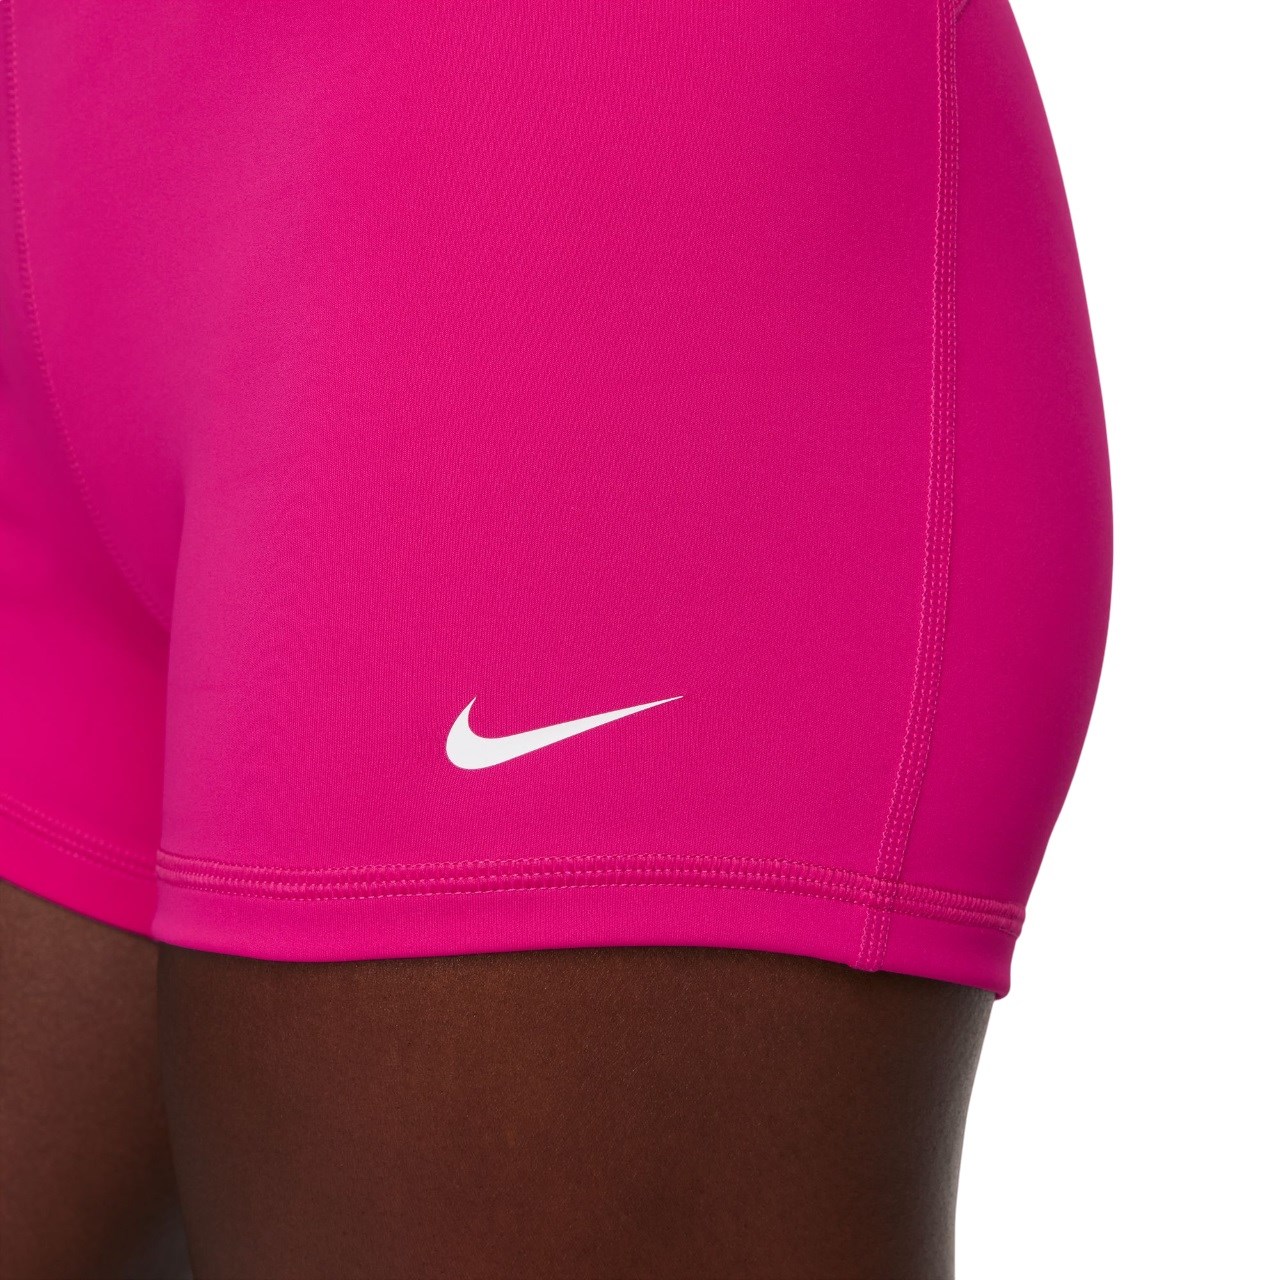 Nike Pro Training 365 3-inch shorts in dark navy